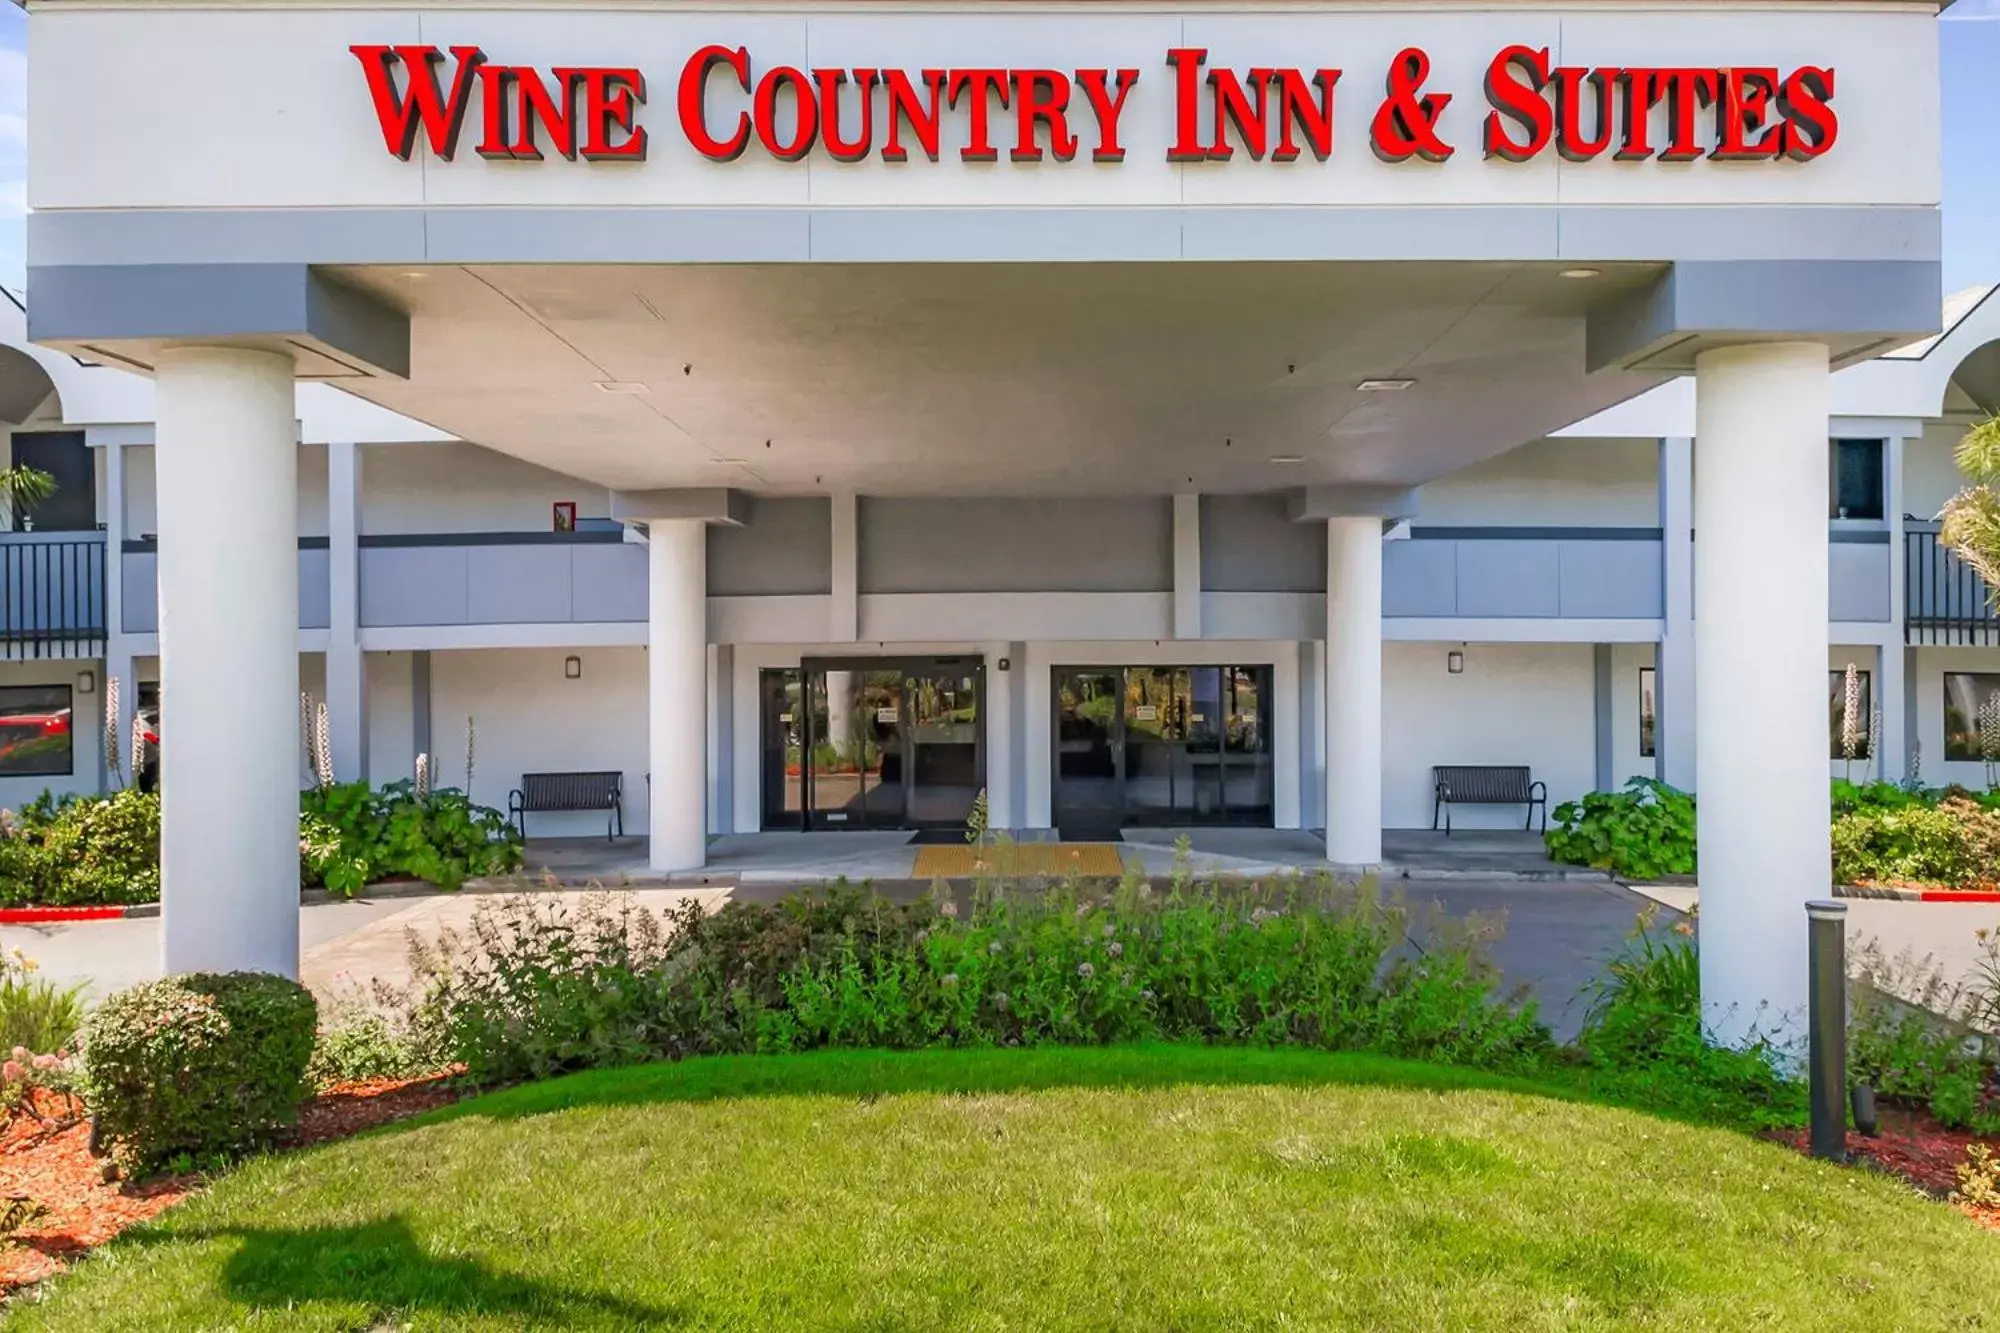 Property building in Best Western Plus Wine Country Inn & Suites